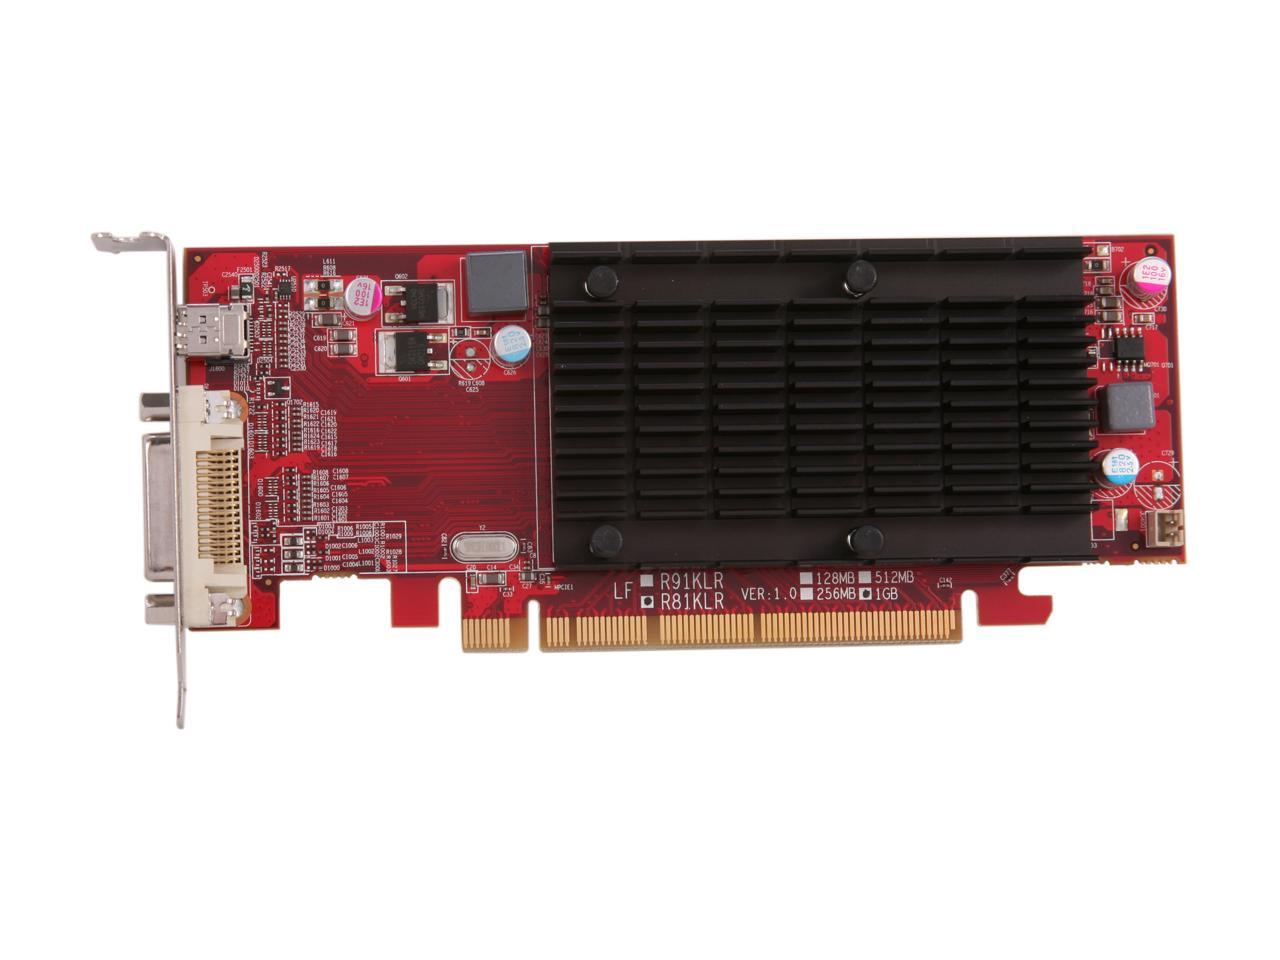 Visiontek Radeon 6350 SFF 1GB DDR3 3M DMS59 (2 x DVI-I, miniDP) w/ 2 x DVI-I to VGA Adapter, 900456 - image 3 of 5